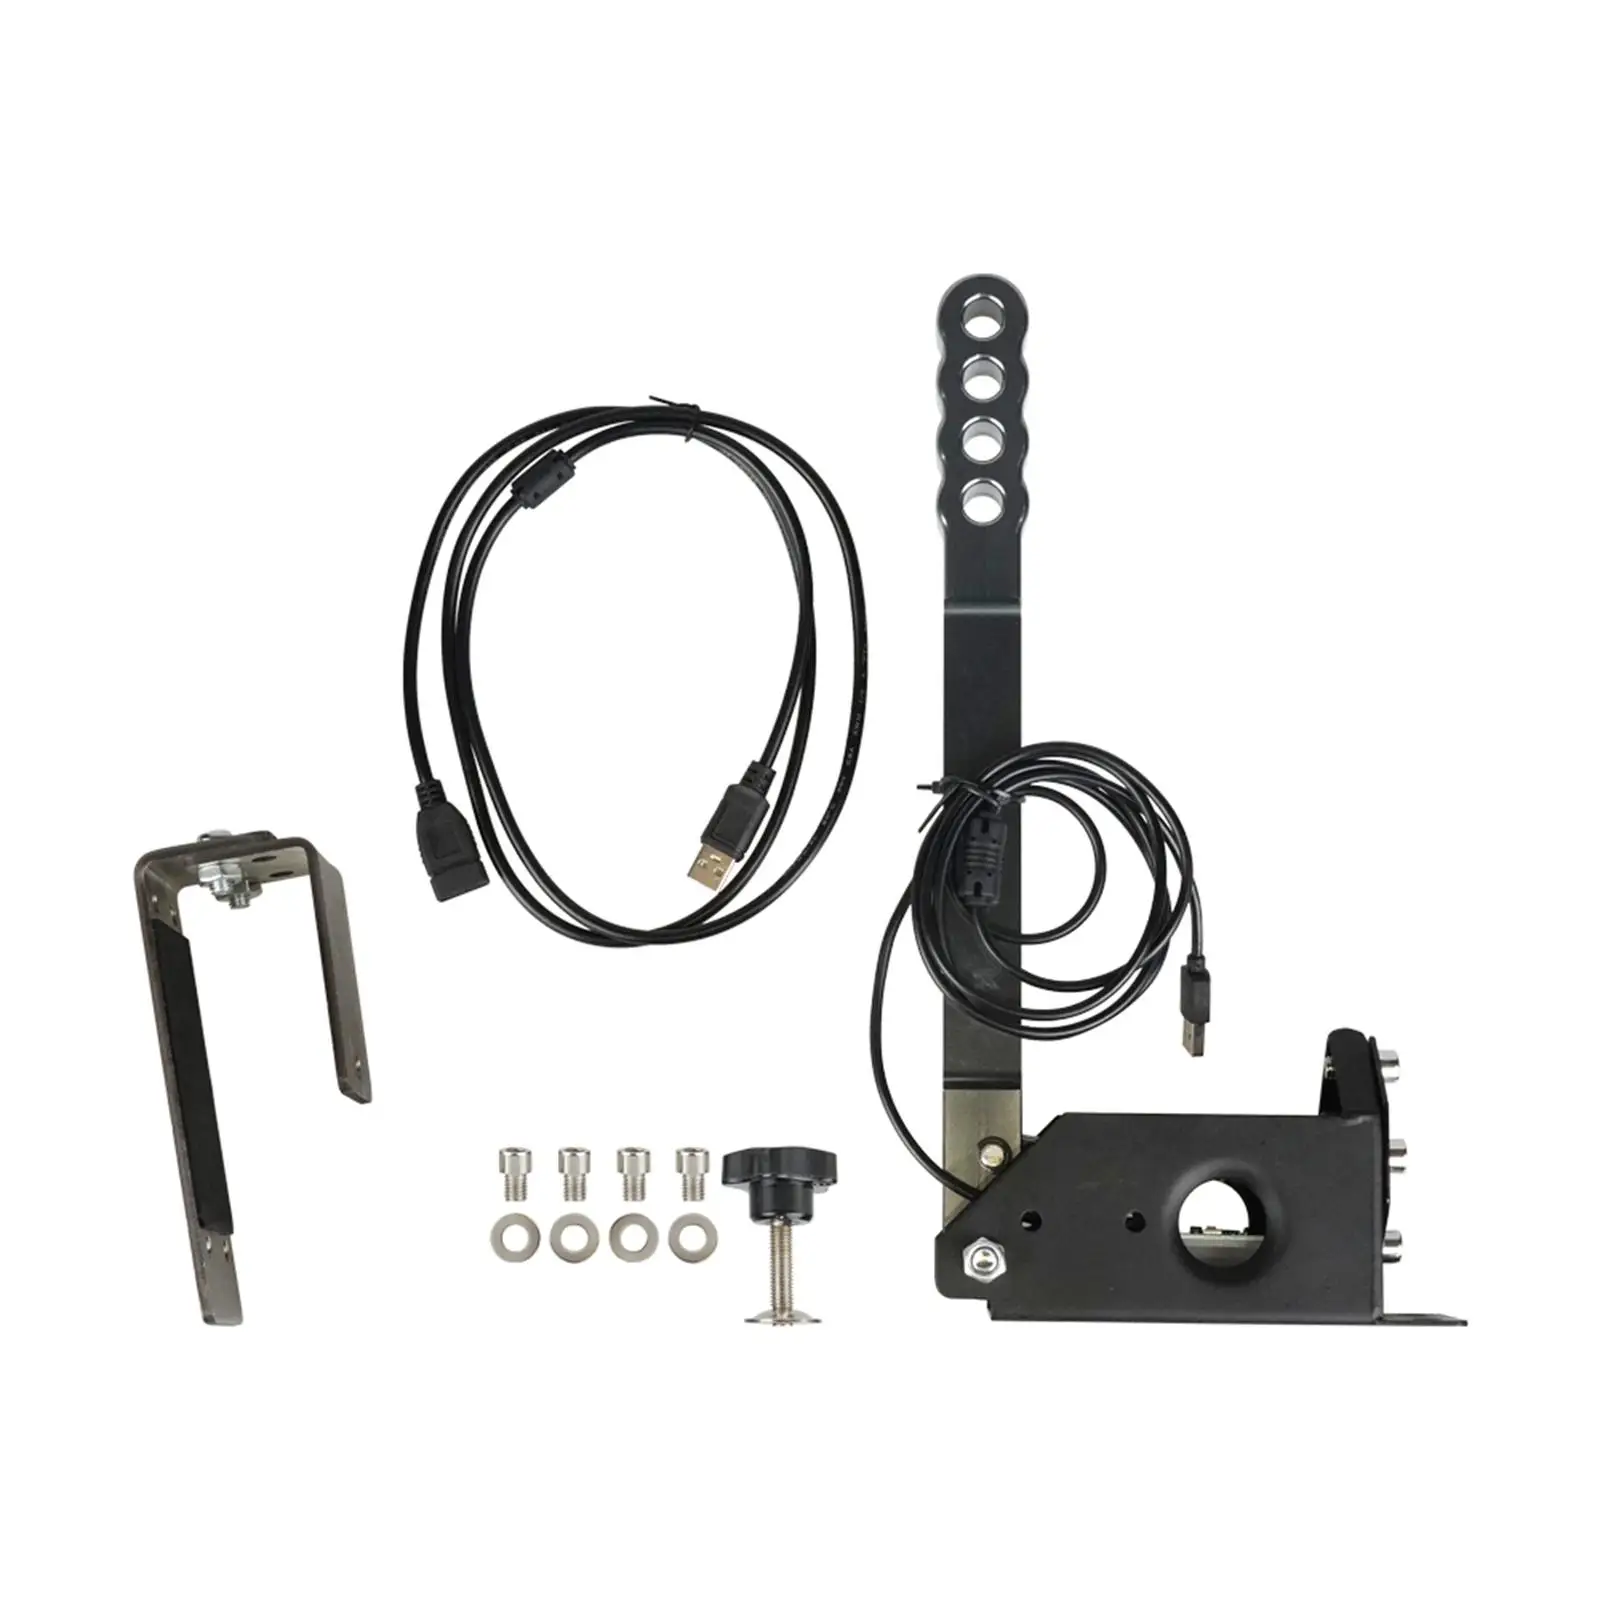 Handbrake Anti Wear Plug and Play USB Long Service Life Adjustable Game Peripherals Handbrake for Logitech G29 Racing Games